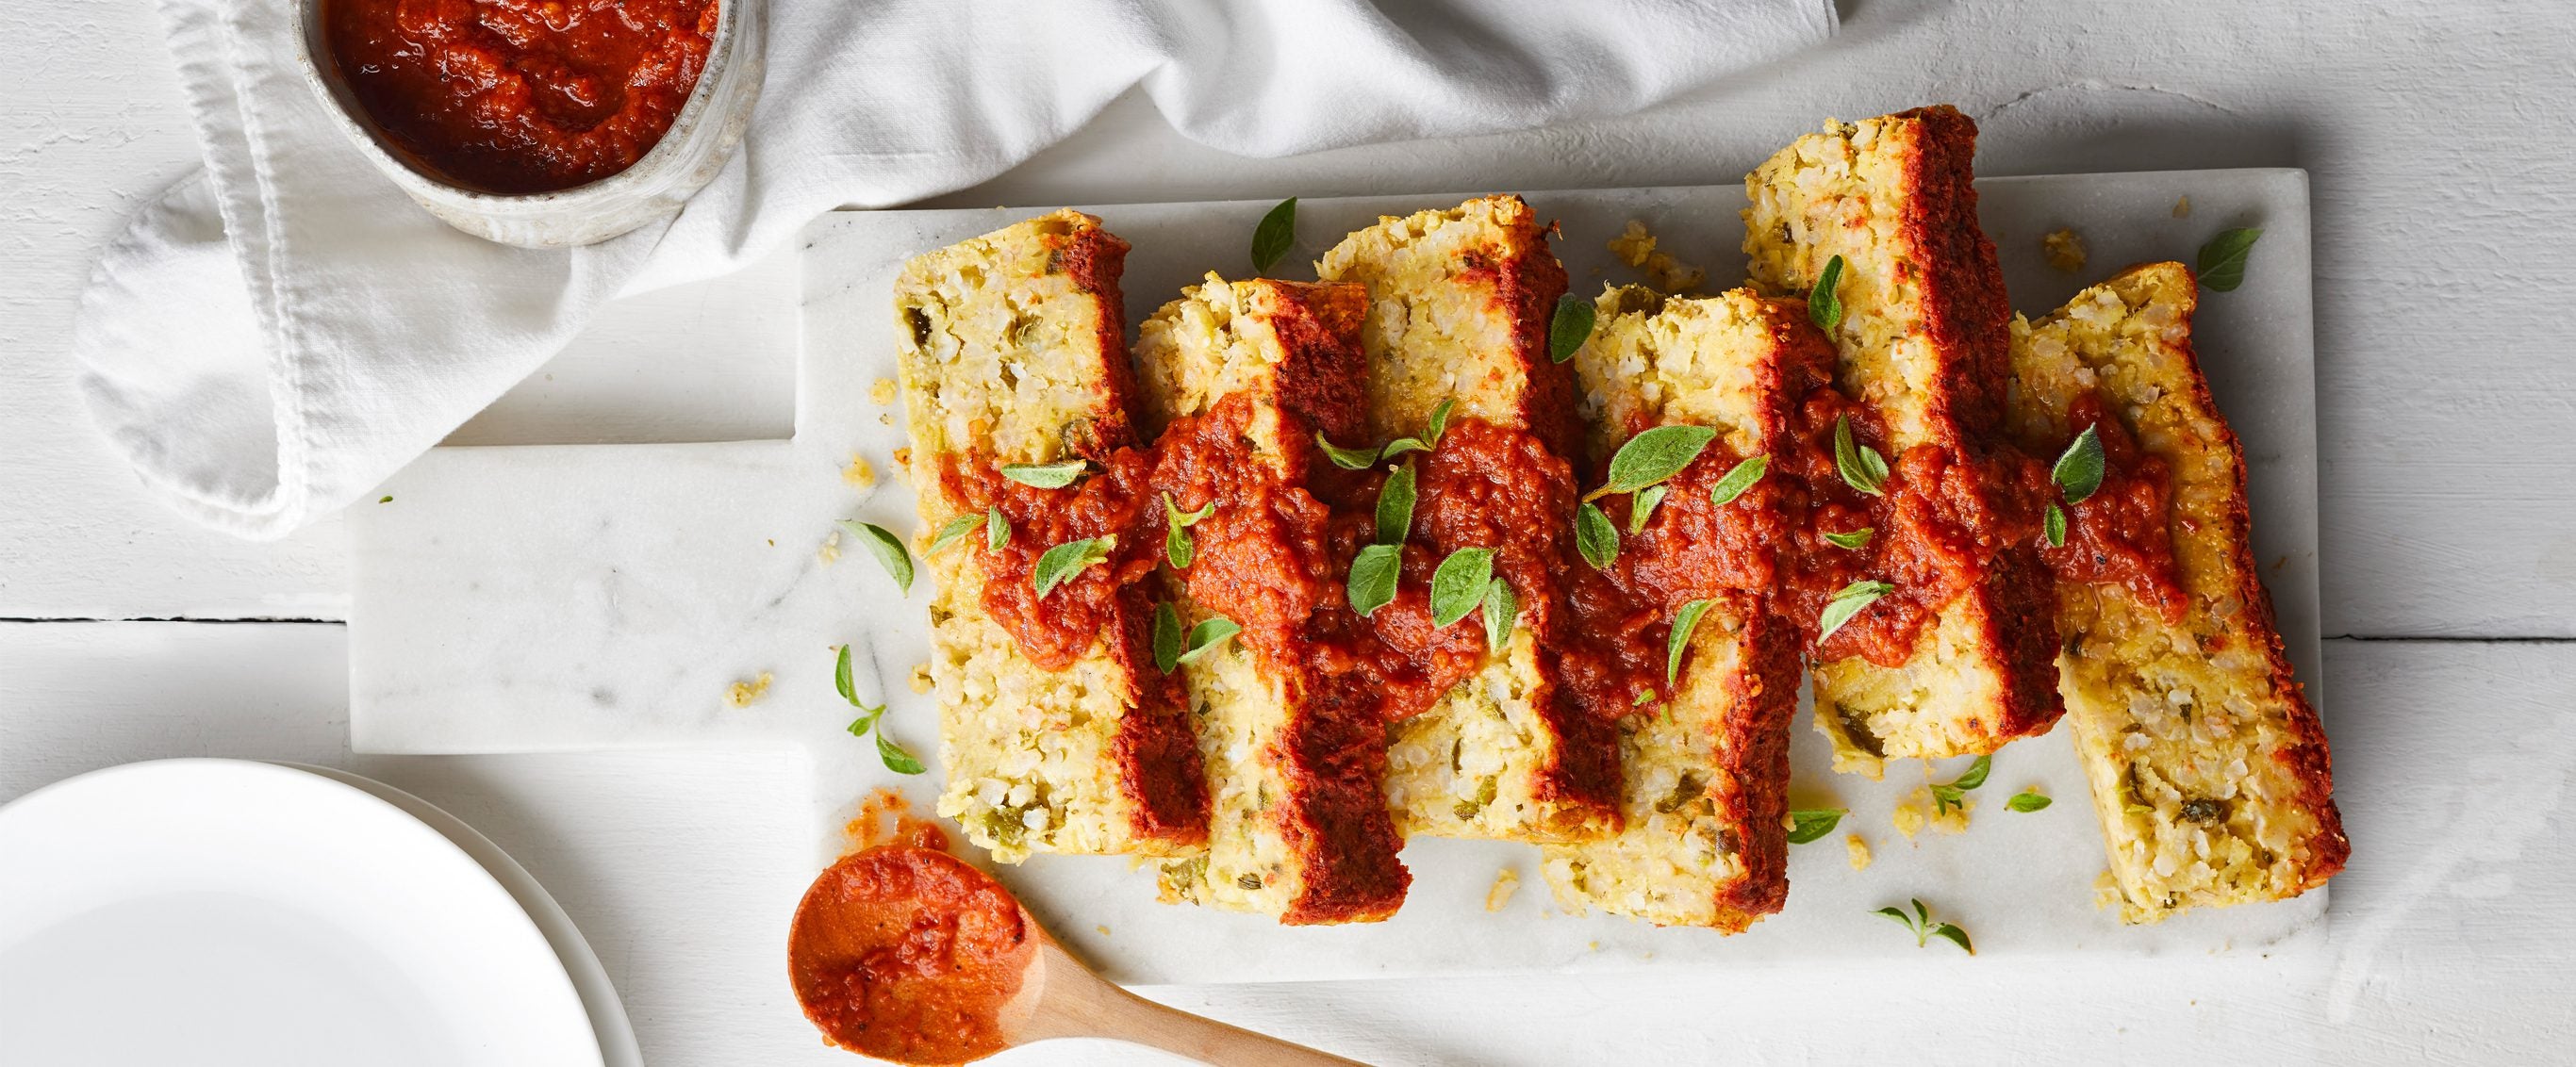 Vegan Red Lentil Loaf with Smoky Tomato Sauce Recipe | ForksoverKnives